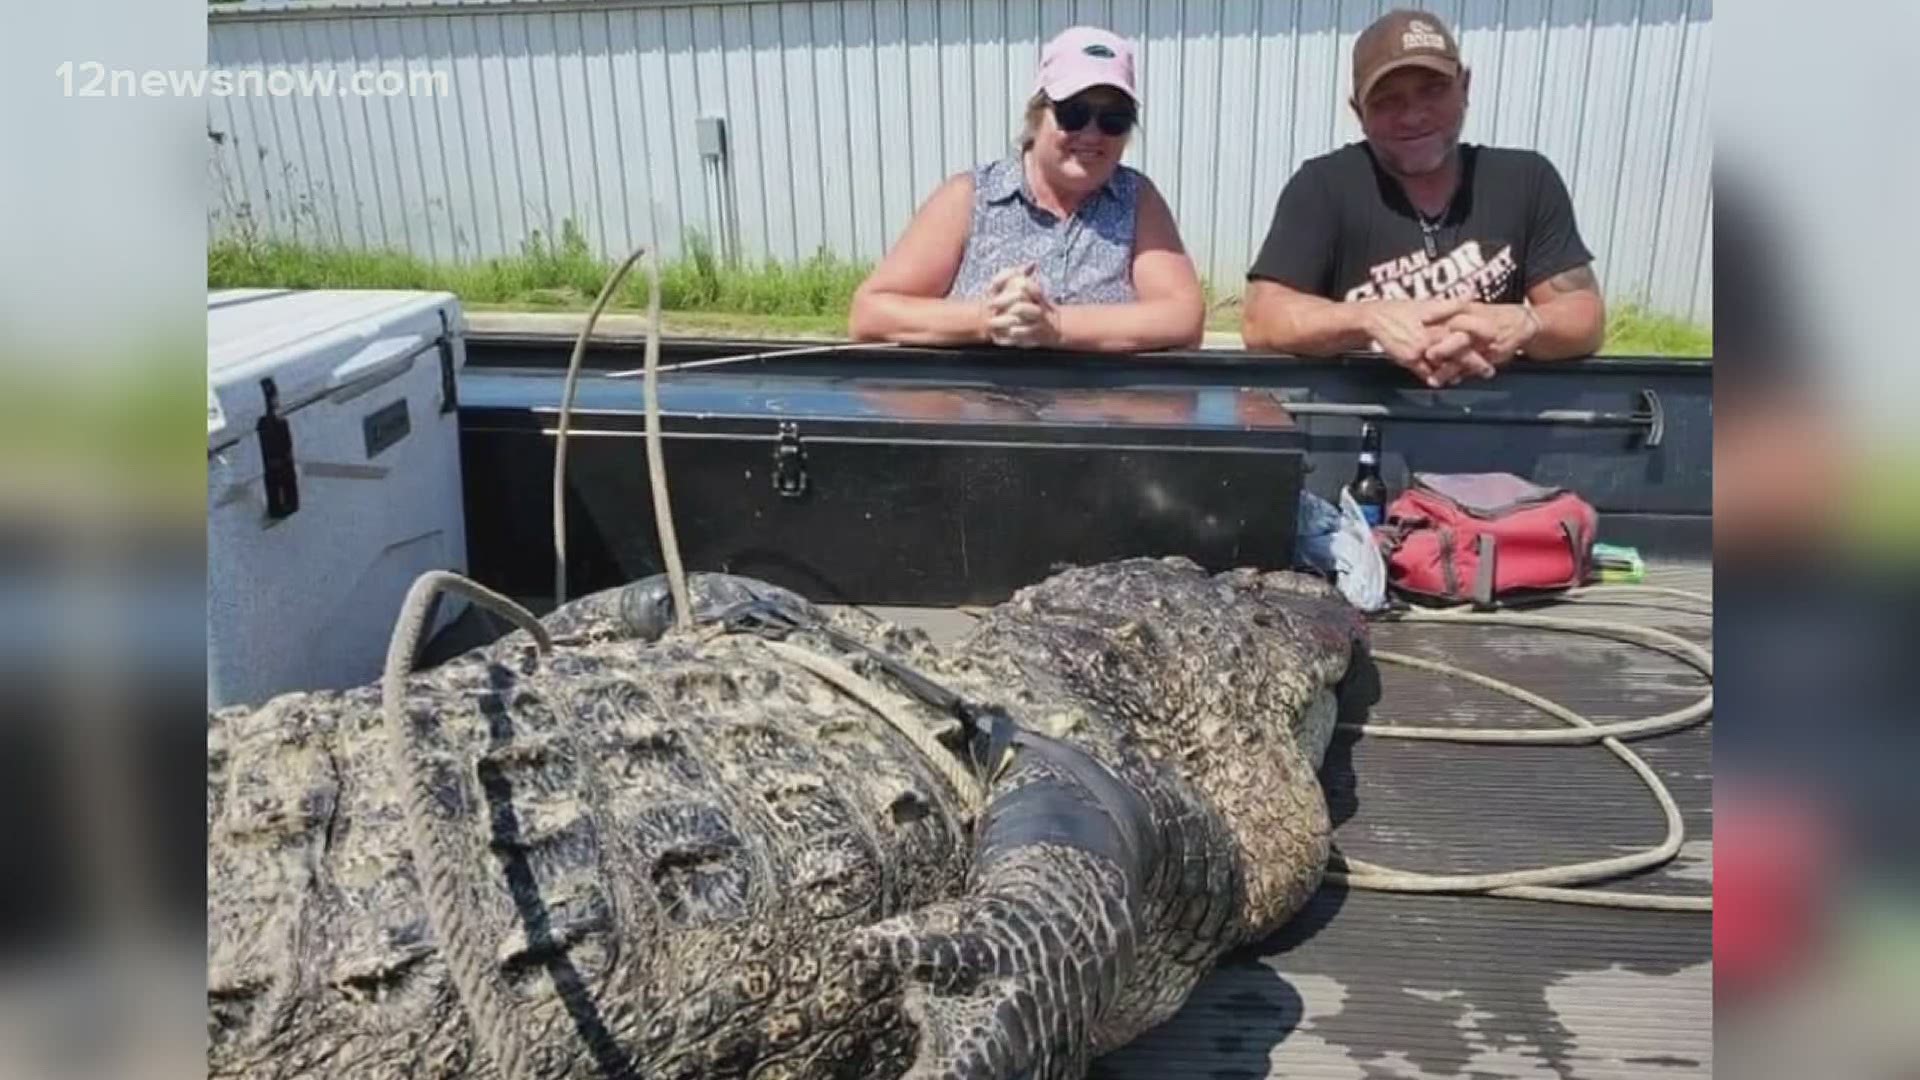 The team has caught 145 alligators so far this year